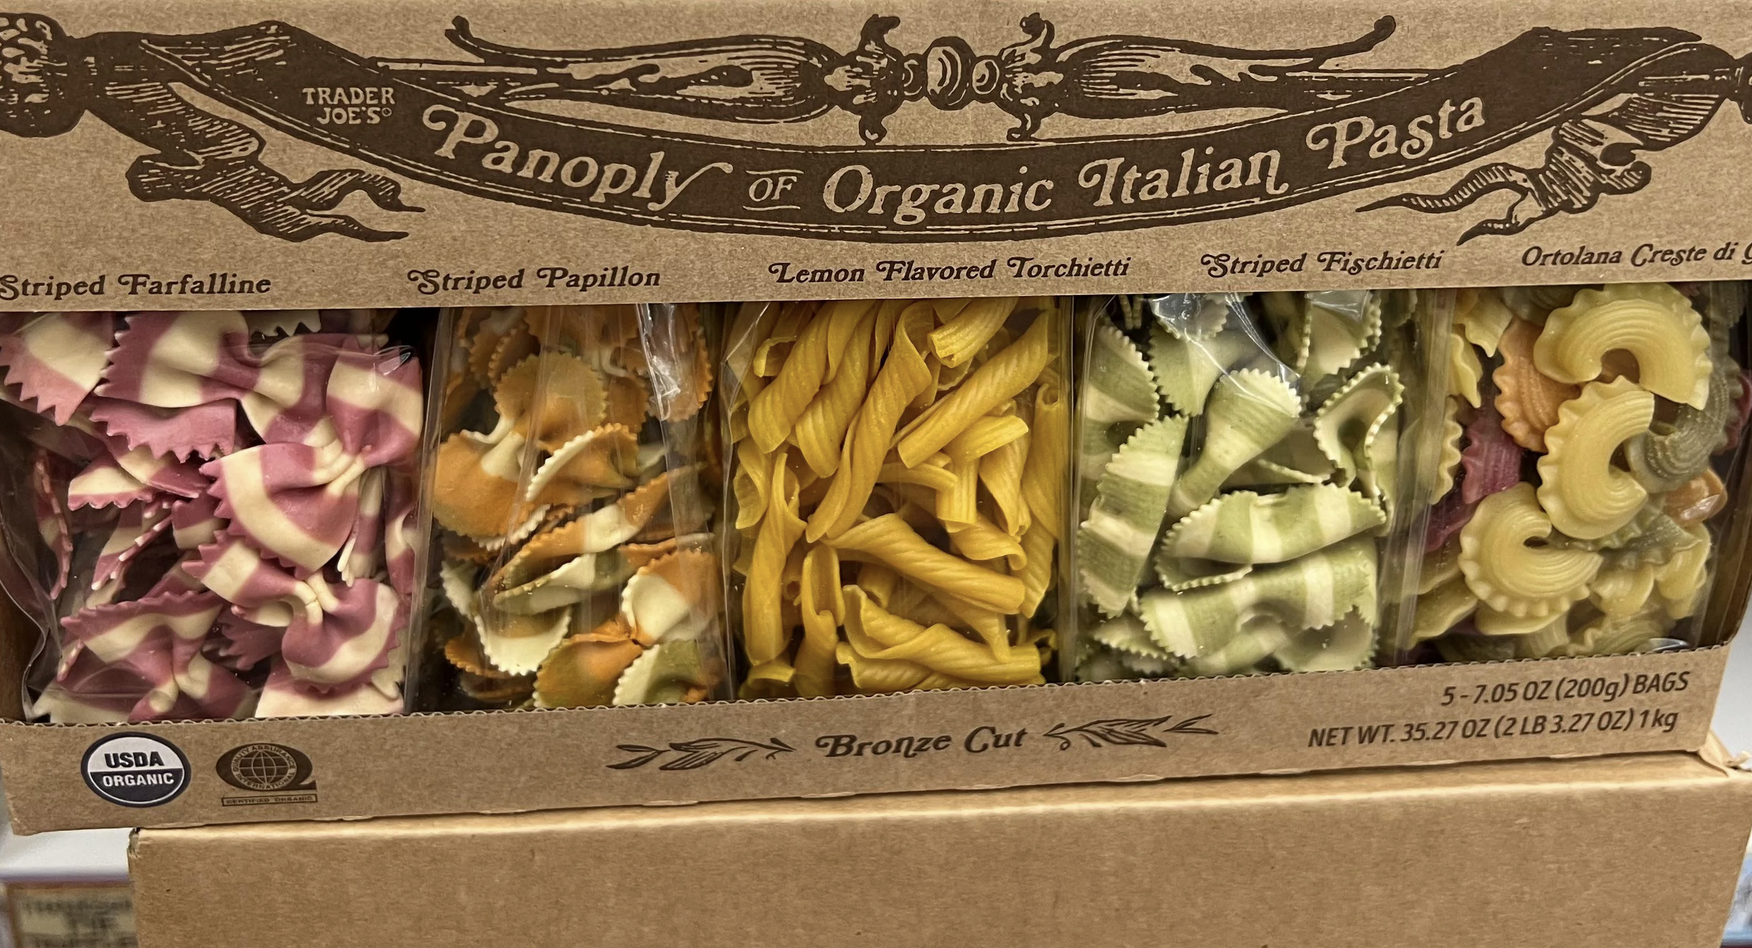 Trader Joe’s Panoply of Organic Italian Pasta Reviews